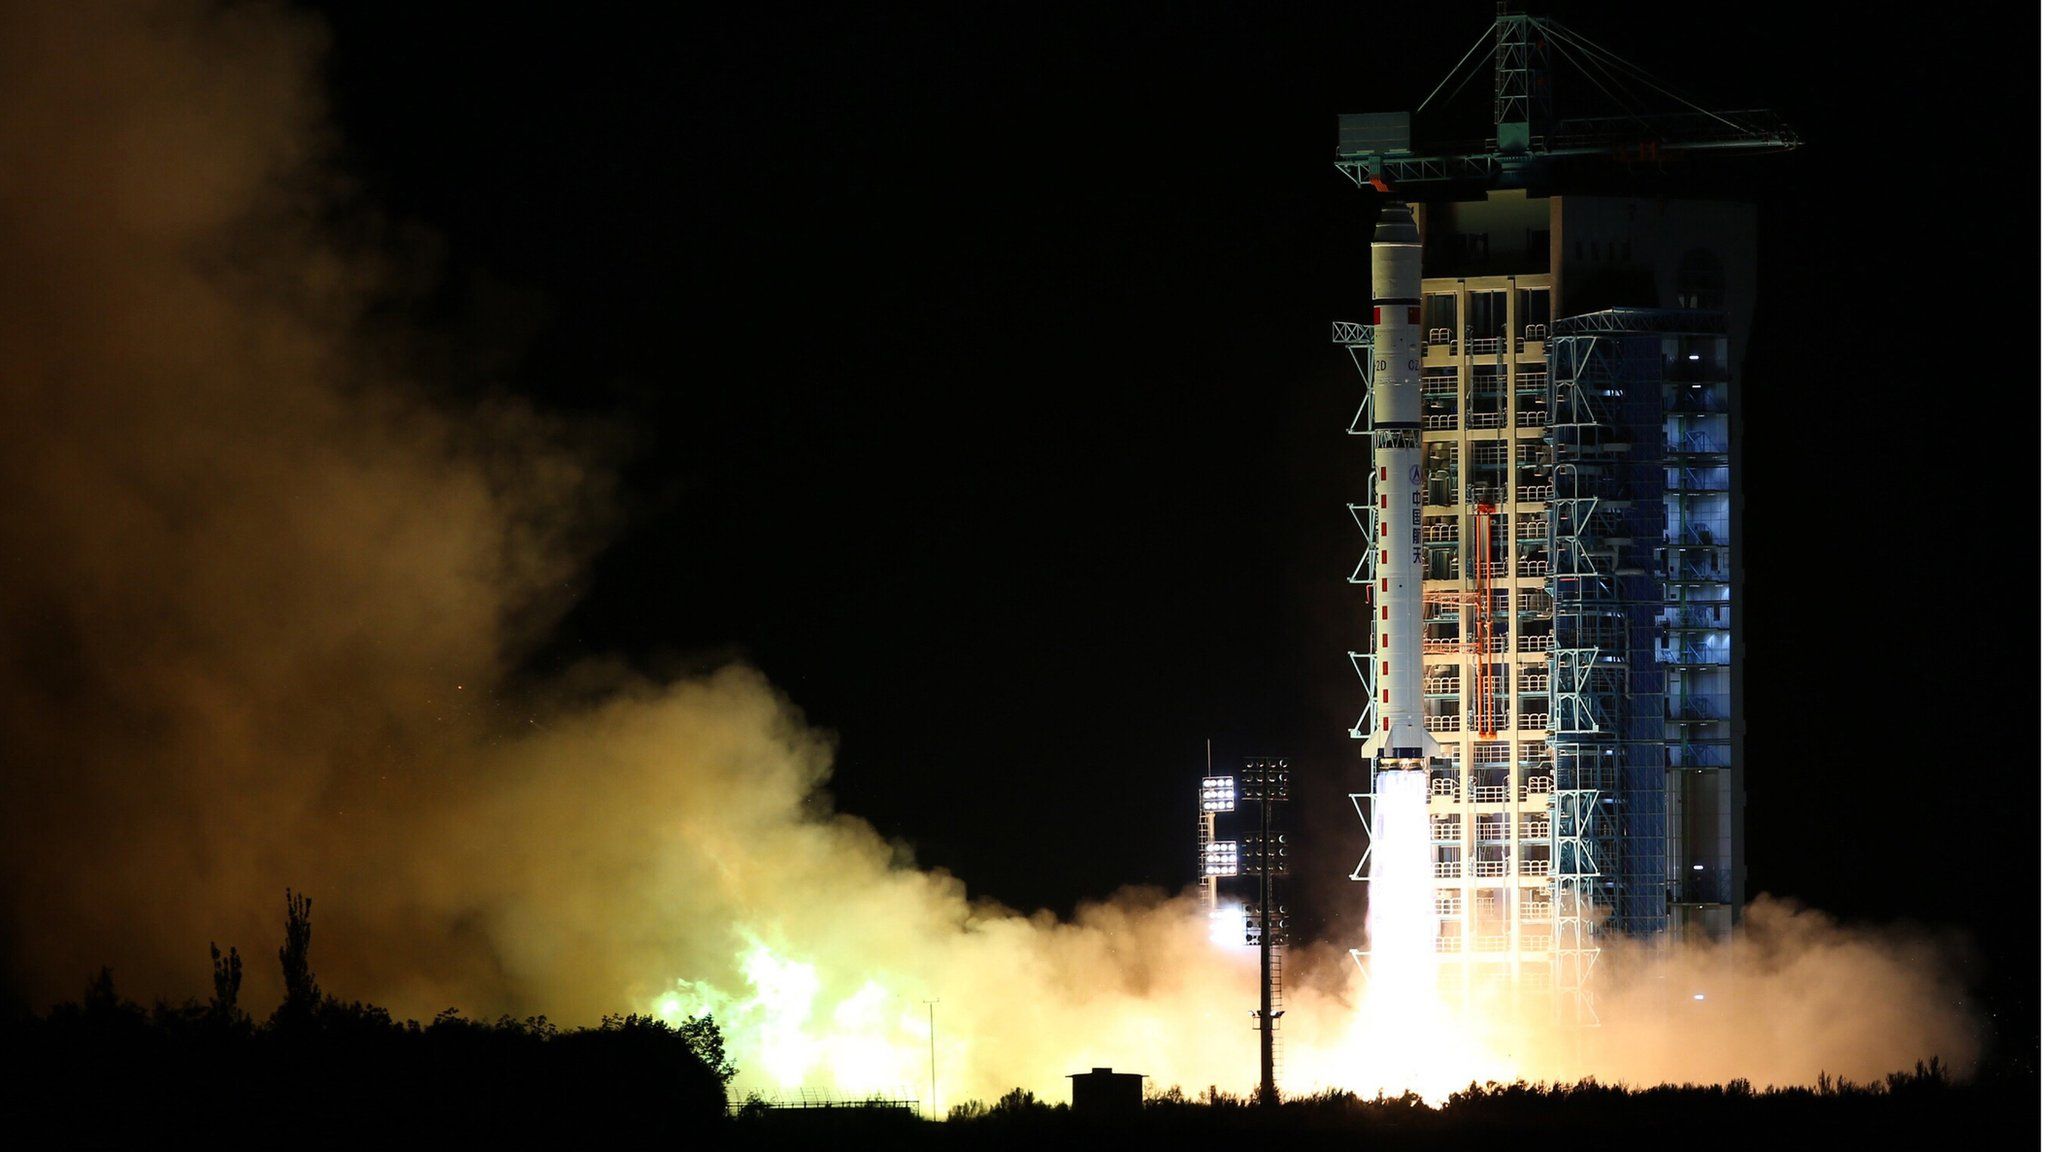 The Long March-2D rocket launching from the Jiuquan Satellite Launch Centre in Jiuquan, Gansu Province, 16 August 2016.